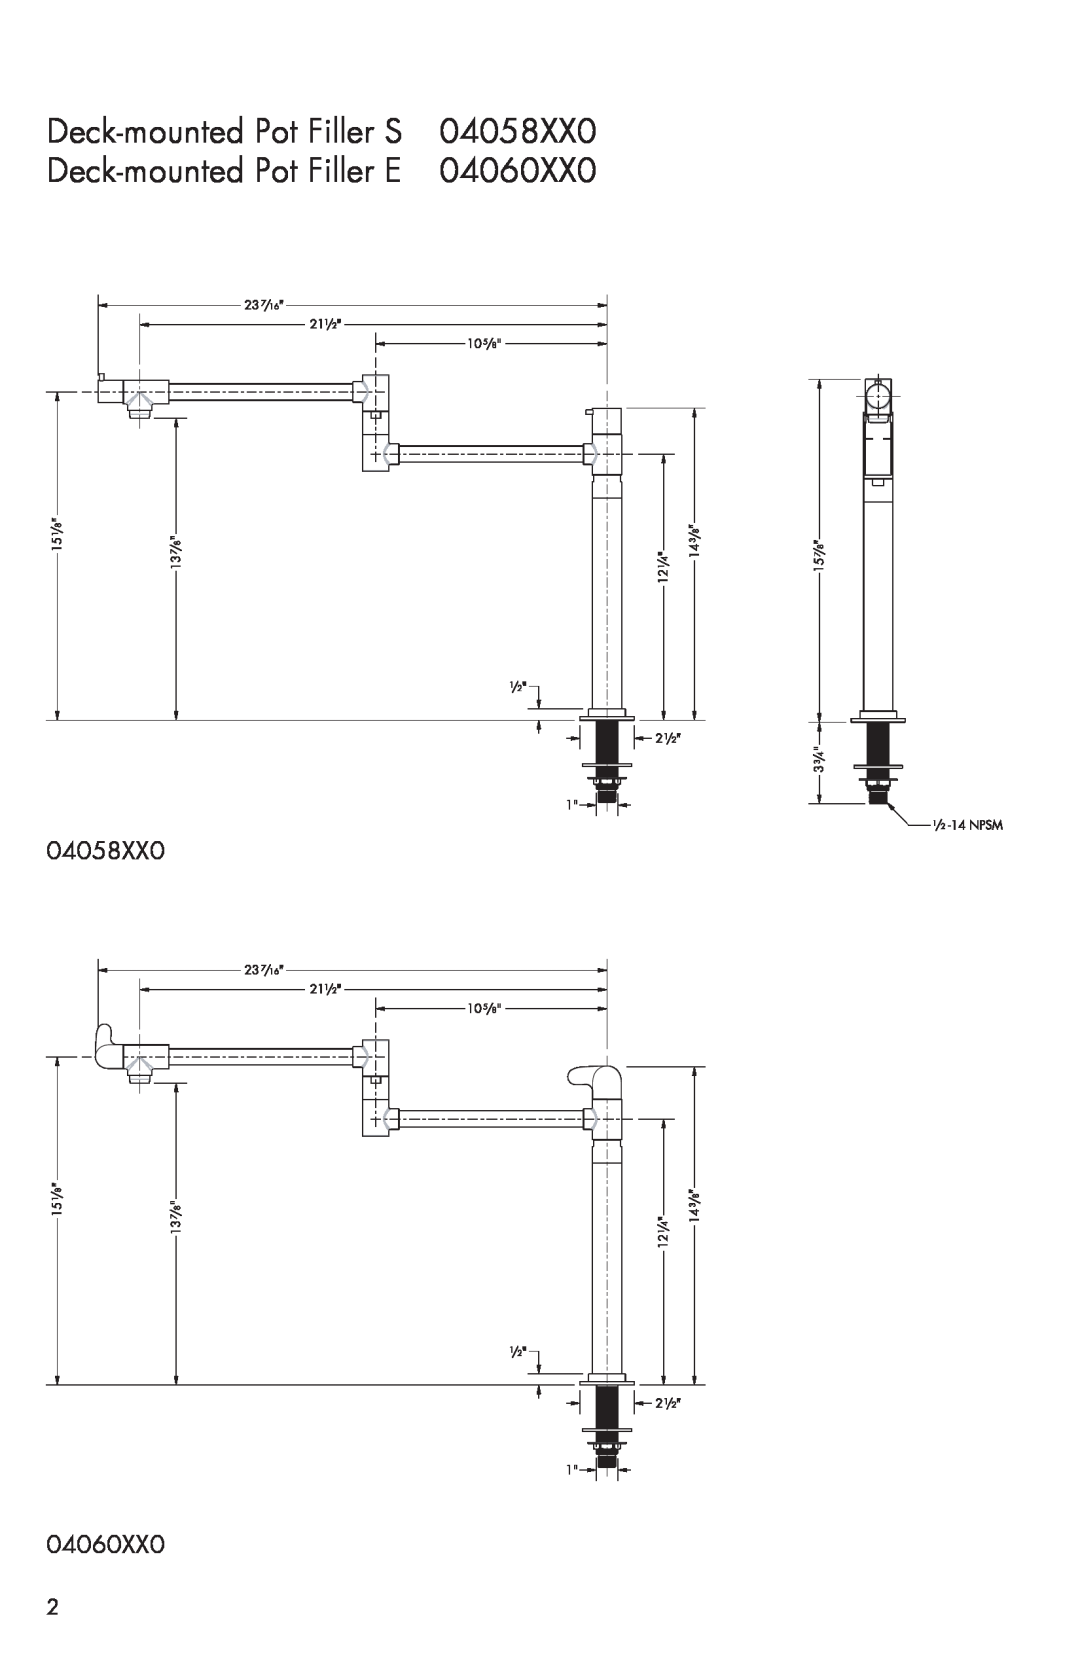 Hans Grohe 04060XX0 installation instructions 04058XX0, Deck-mounted Pot Filler S, Deck-mounted Pot Filler E 